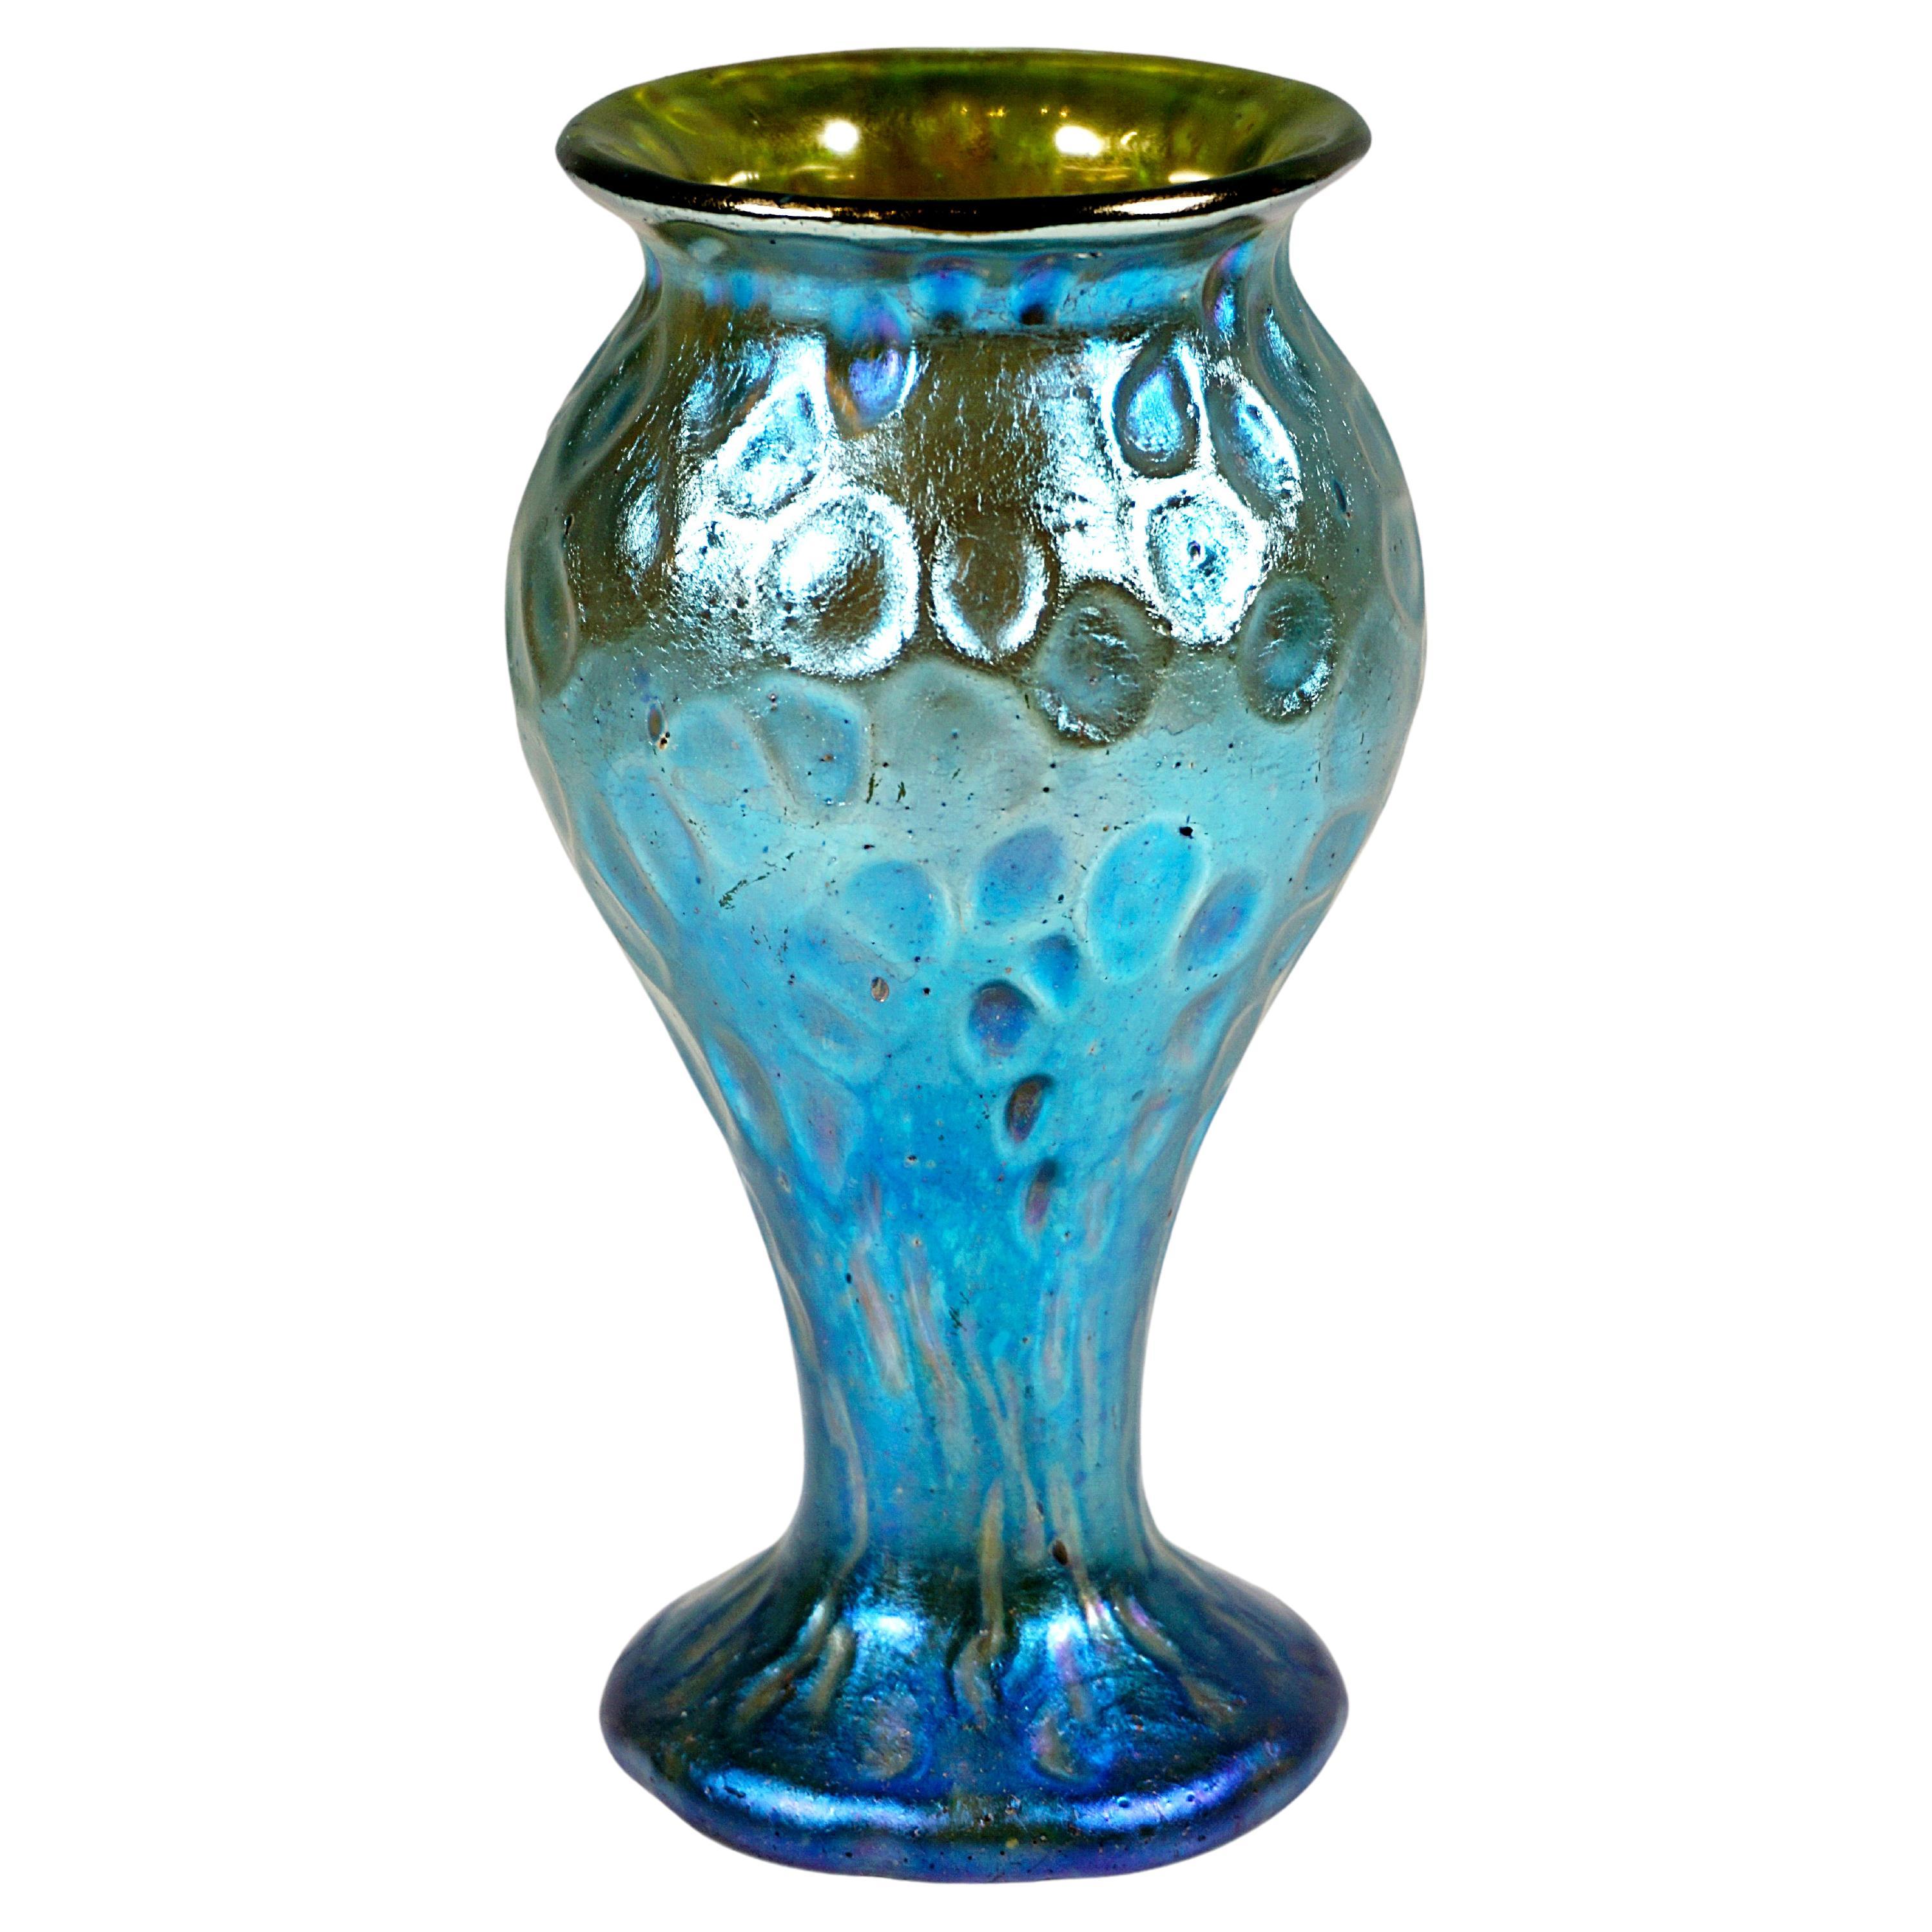 Loetz Art Nouveau Vase, Crete Diaspora Silver Iris, Austria-Hungary, Around 1902 For Sale